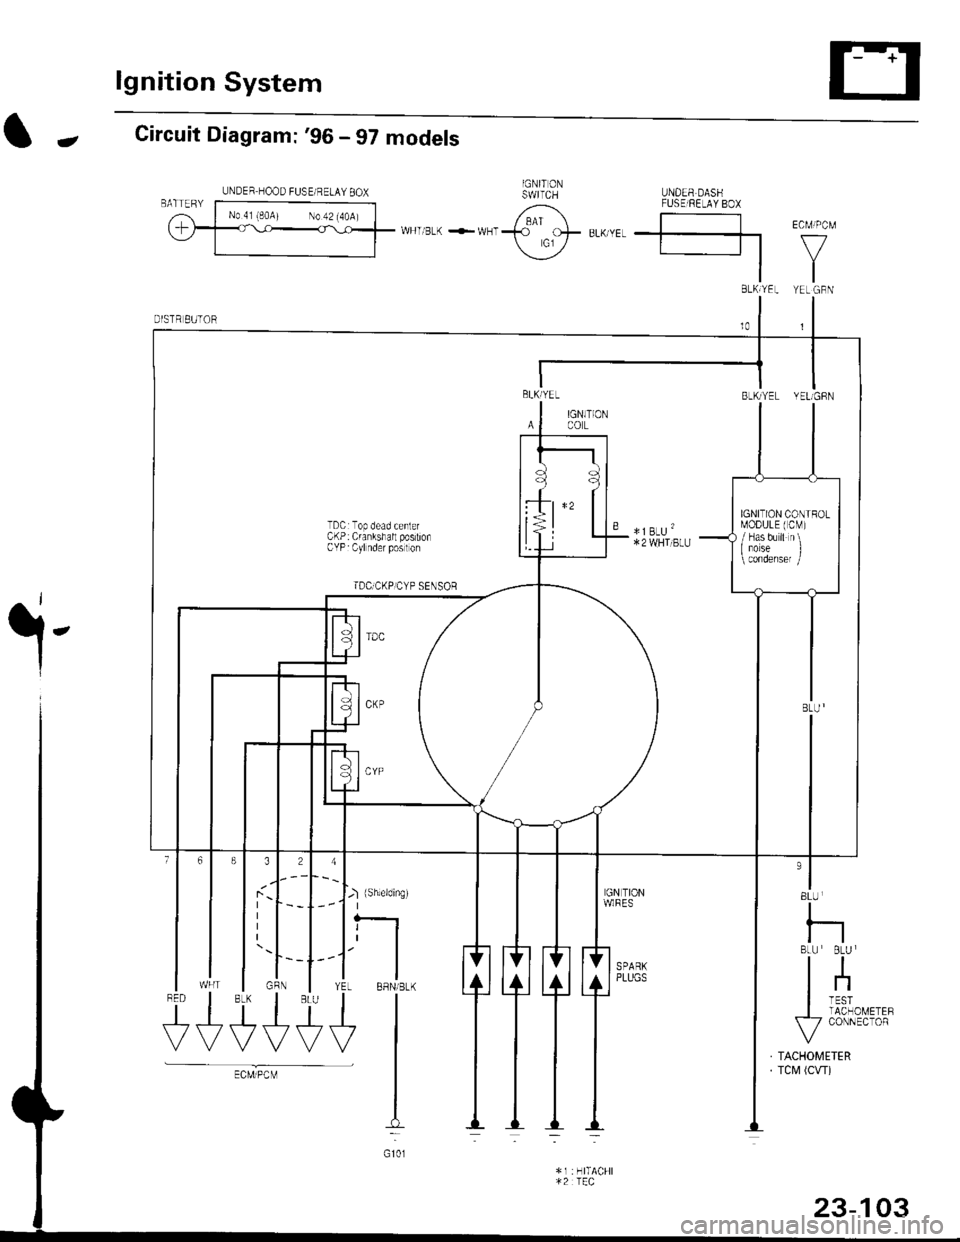 HONDA CIVIC 1998 6.G Workshop Manual lgnition System
-Circuit Diagram: 96 - 97 models
.i-
8LU
I
nBLU BLU I
tl
lnI TESTI TACHOMETEF\-7 CONNECTOR
TACHOMETERTCM (CW)
J-) {sh,eldinsrt I
tfYEL BBN/BLK
+l
I:
G101
$t+++
UNDER HOOD FUSE/ RELAY